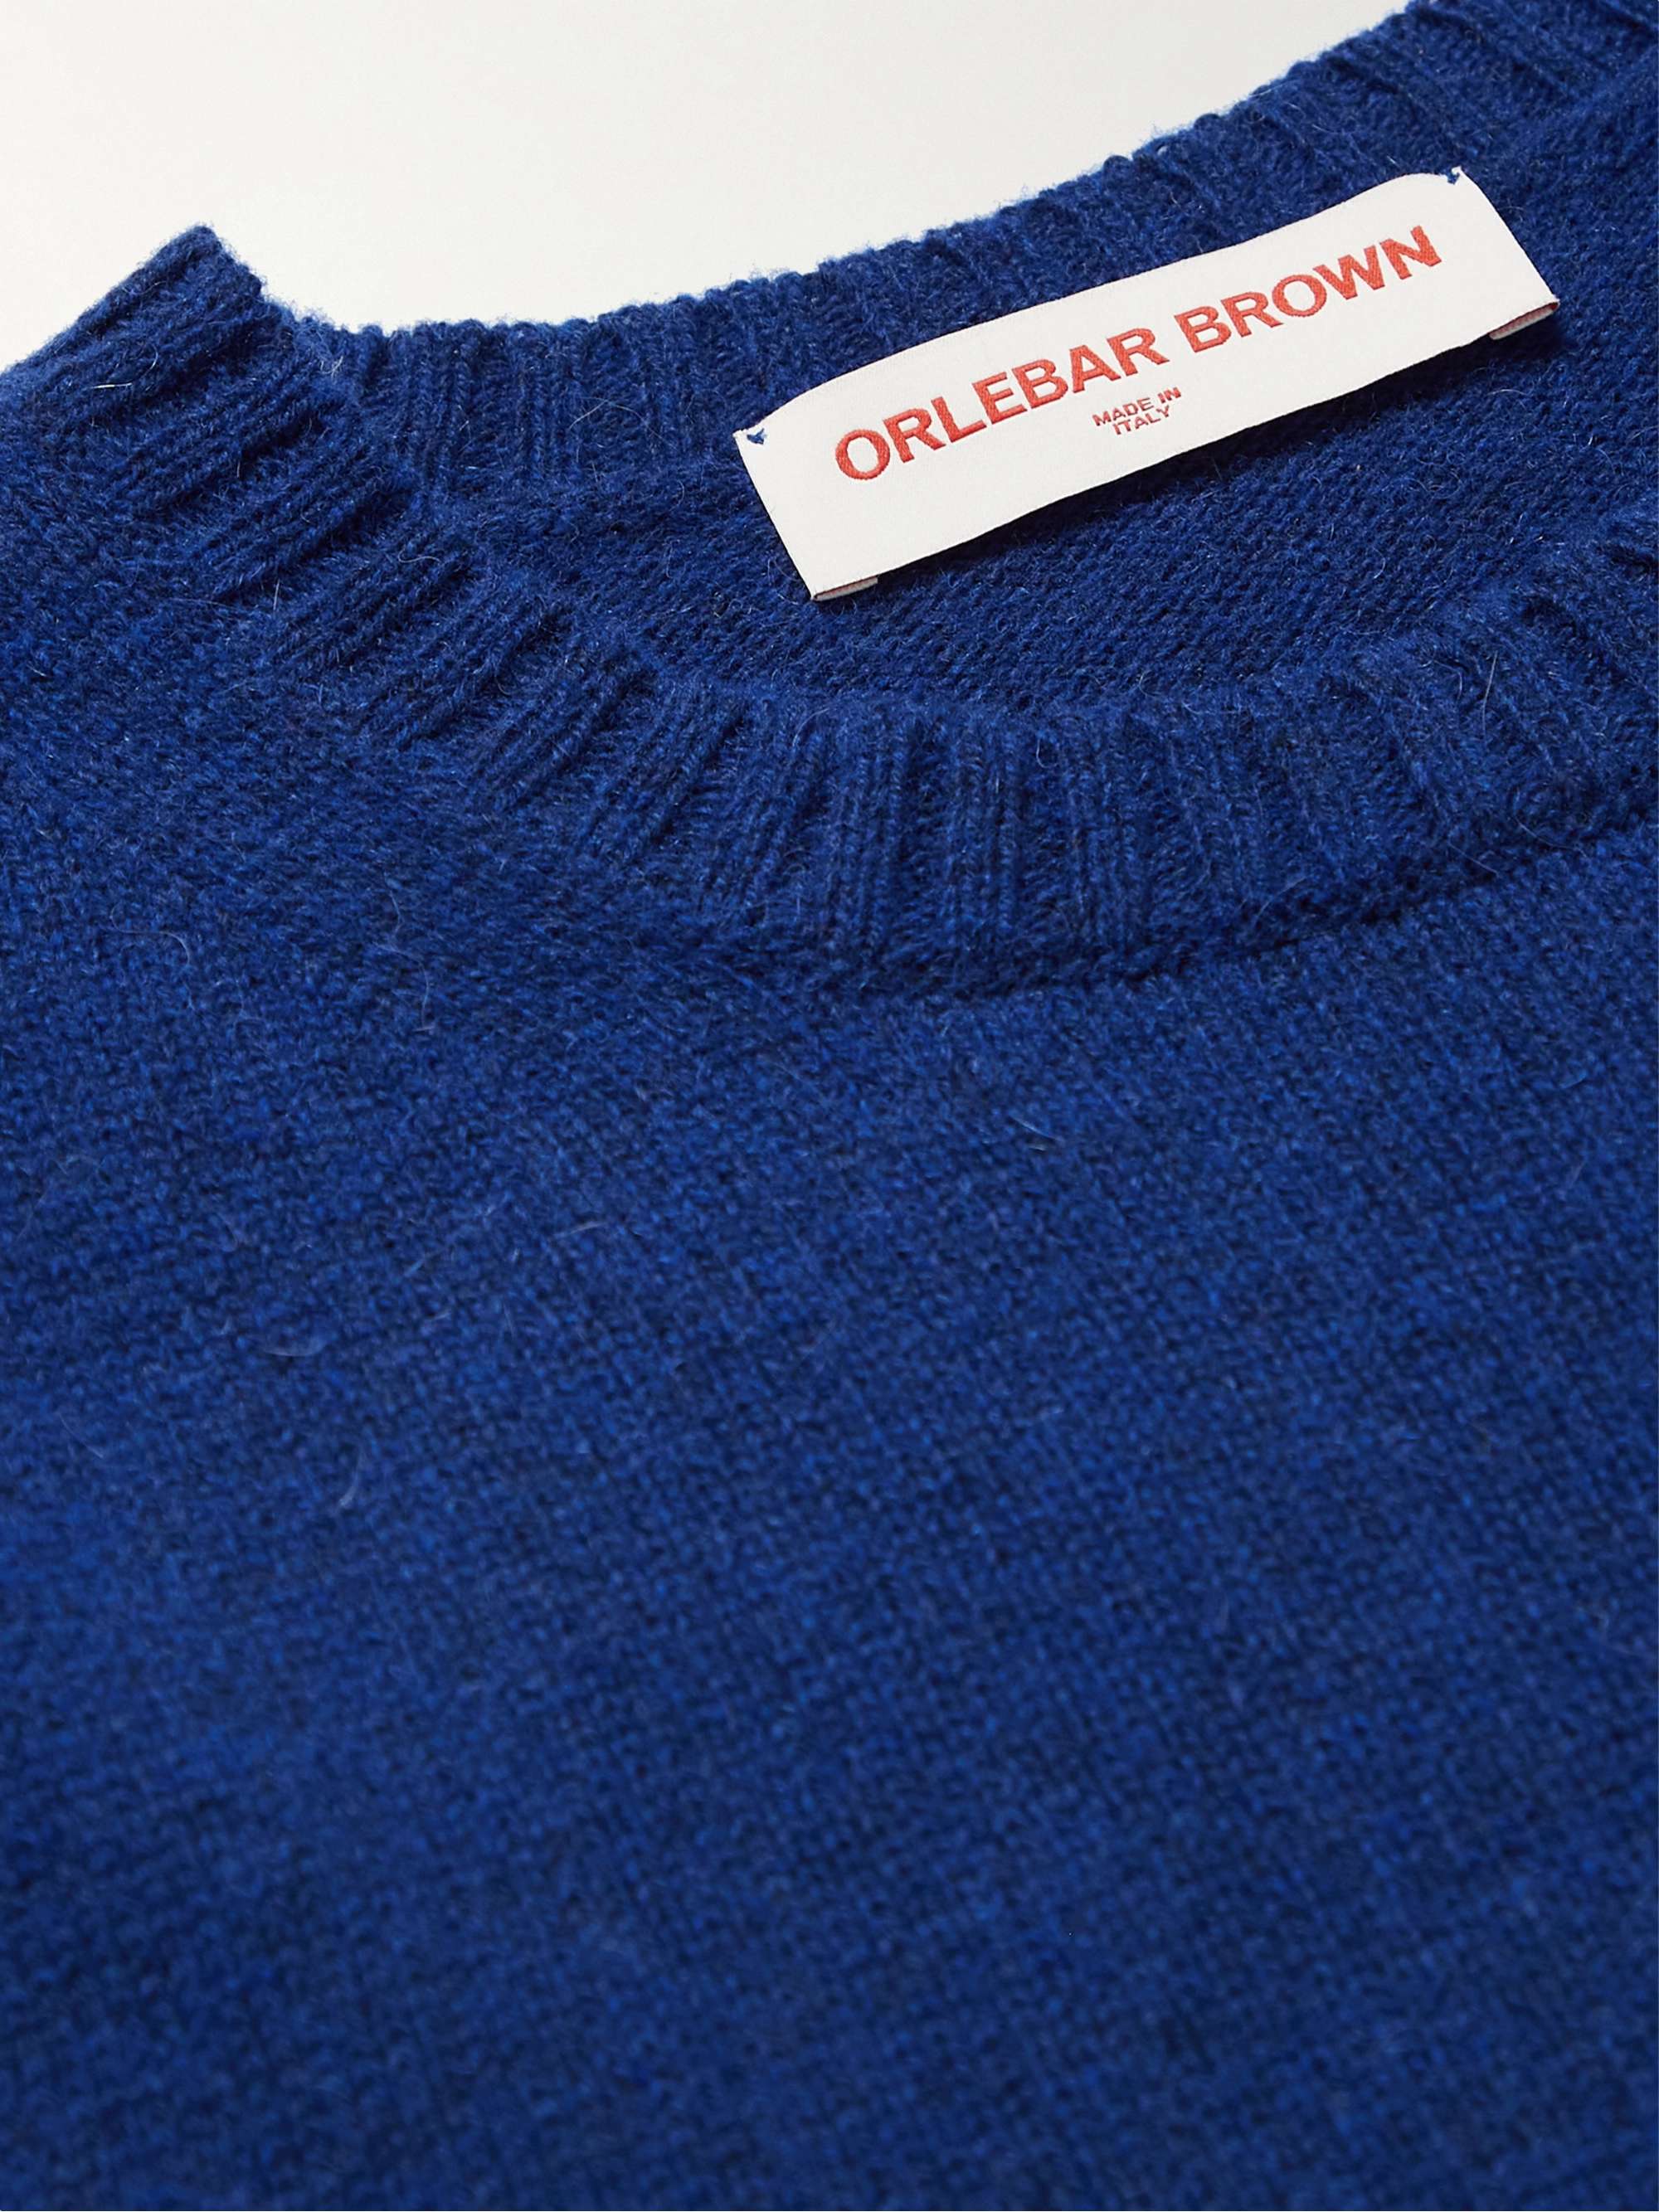 ORLEBAR BROWN Lorca Alpaca-Blend Sweater